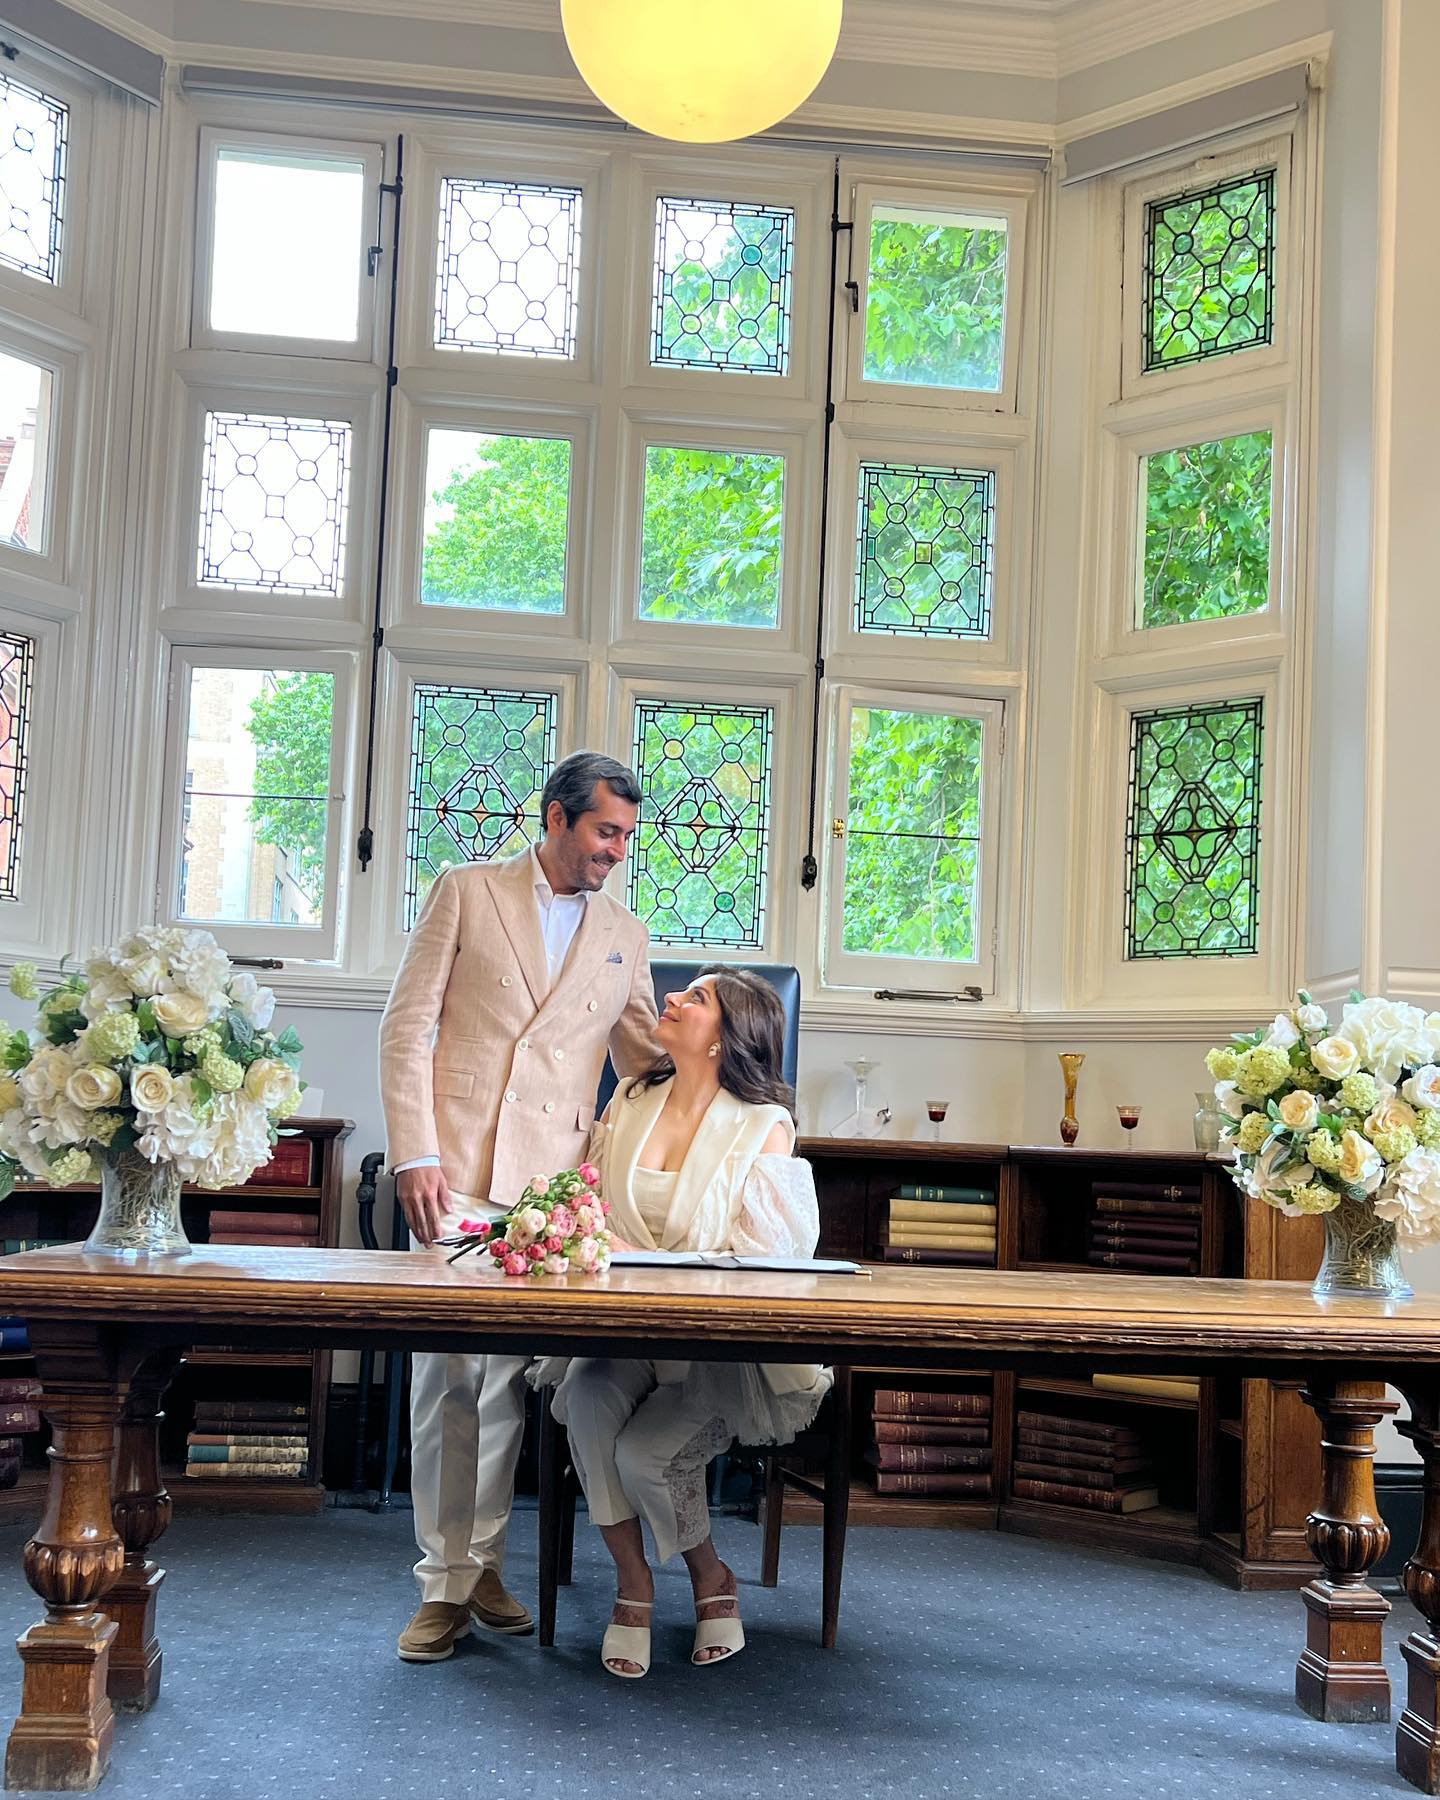 Take A Glimpse Of Kanika Kapoor And Gautam’s Court Wedding In London